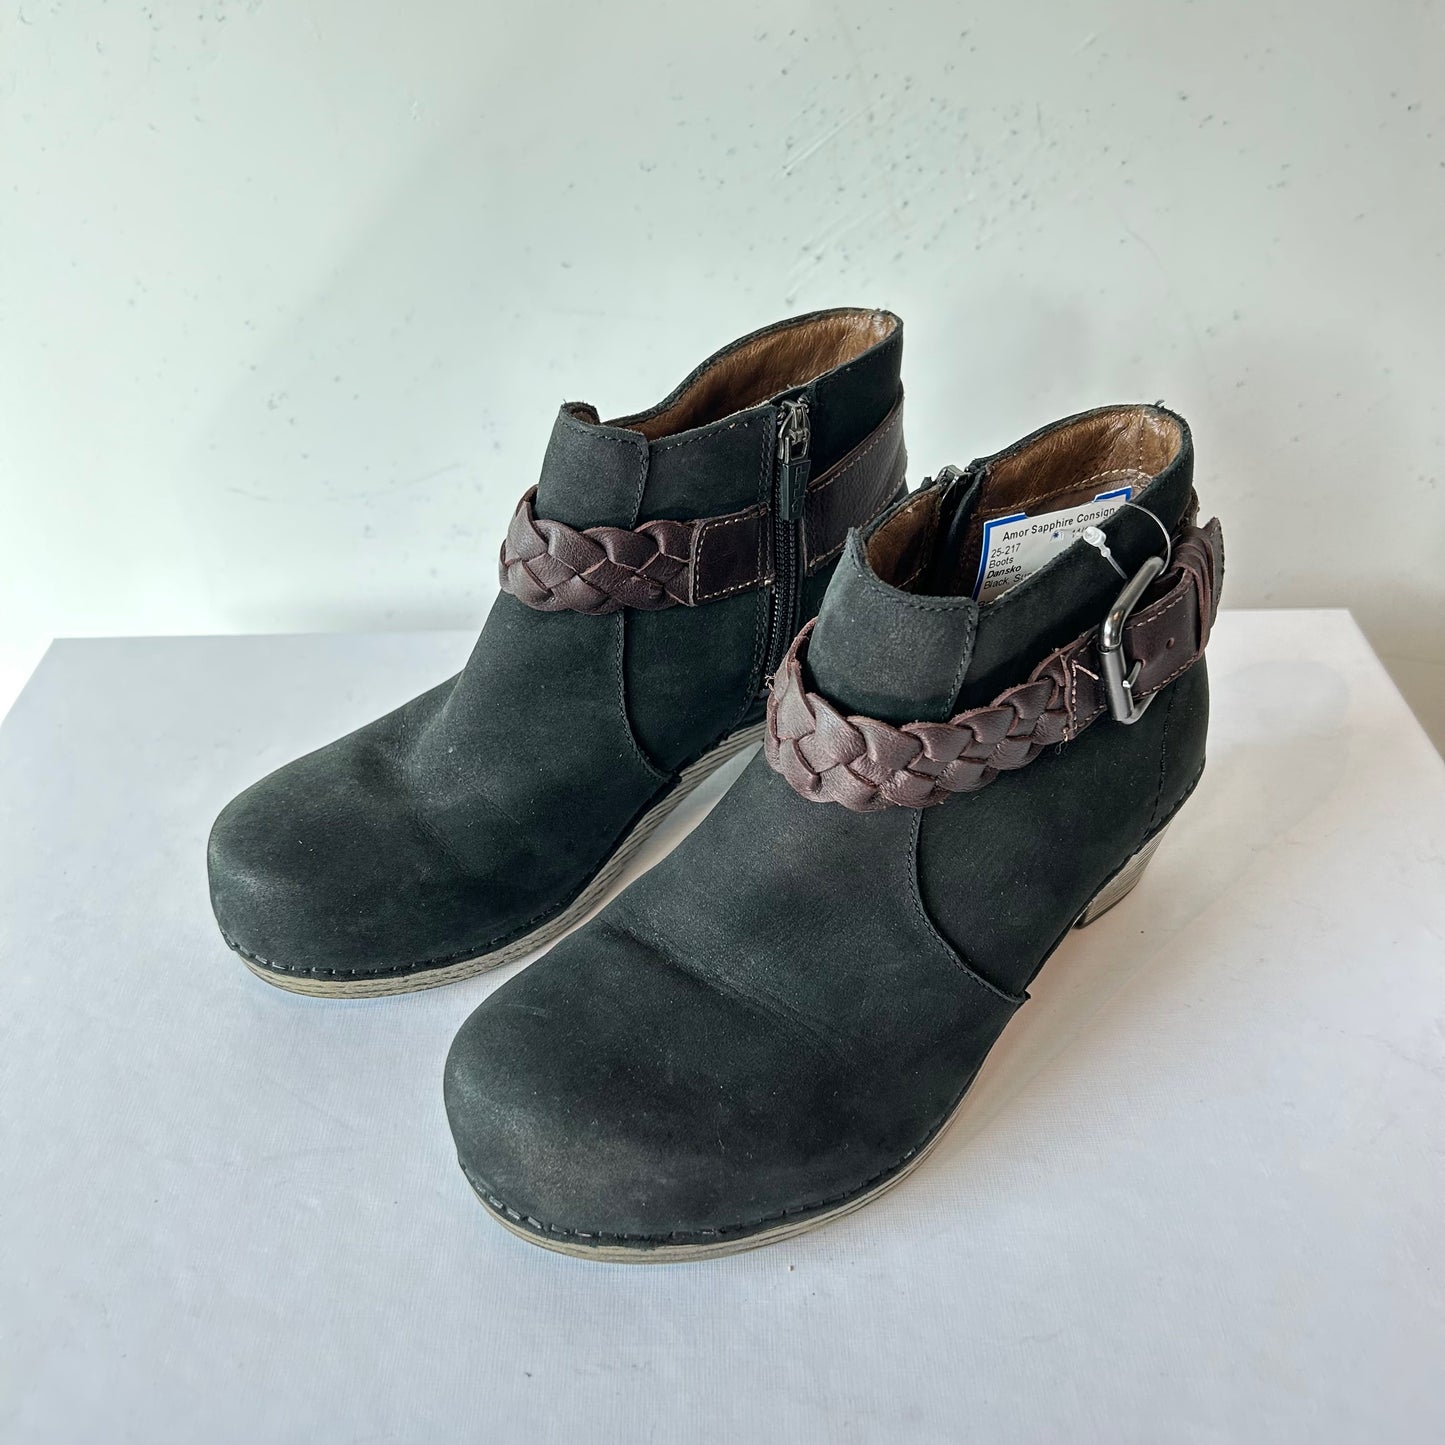 6 Dansko Black Boots